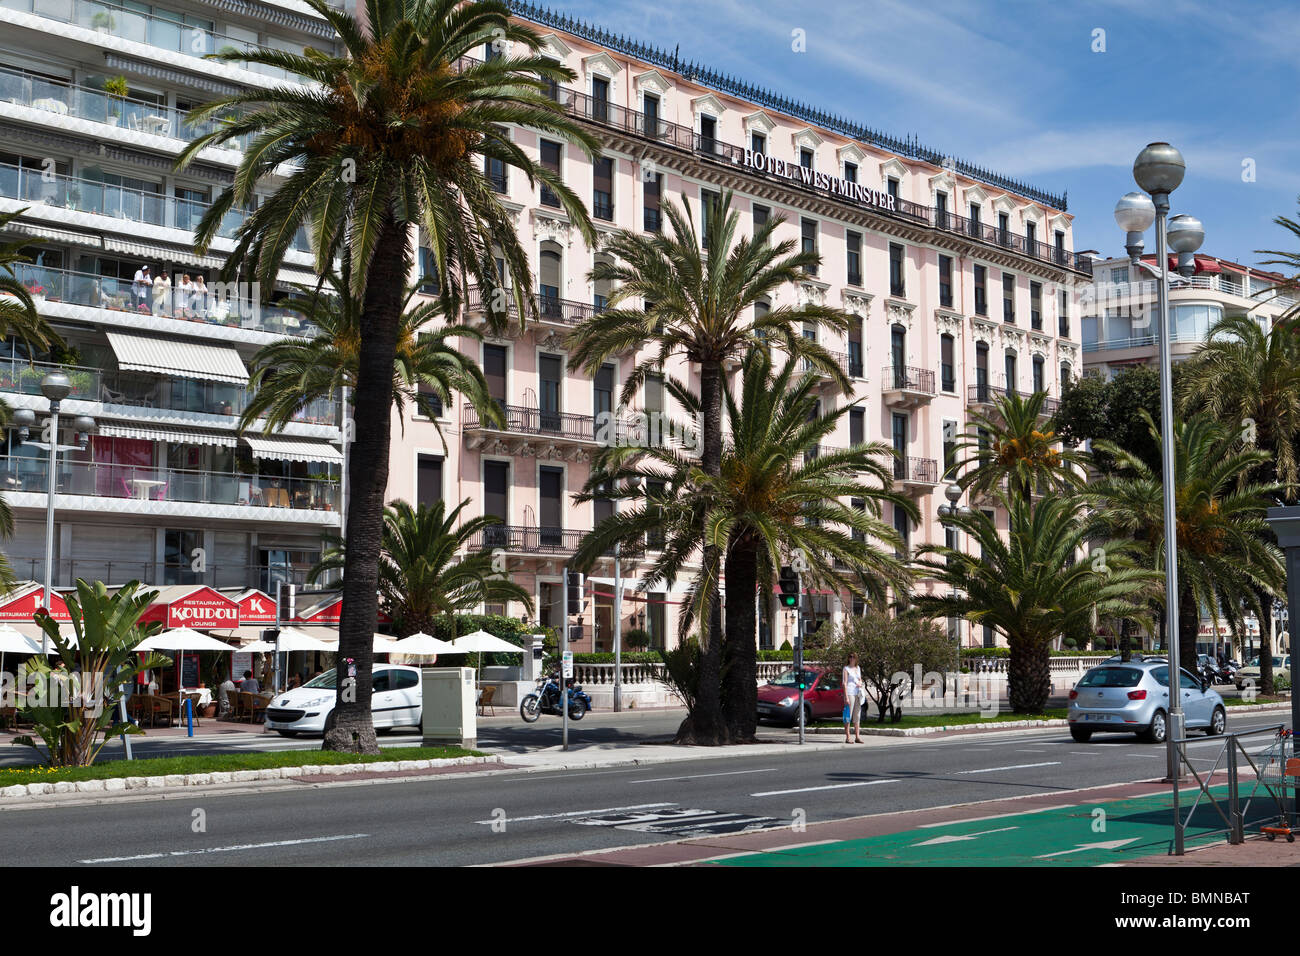 Hotel Westminster,Promenade des Anglais,Nice,Cote D'azur,France Stock Photo